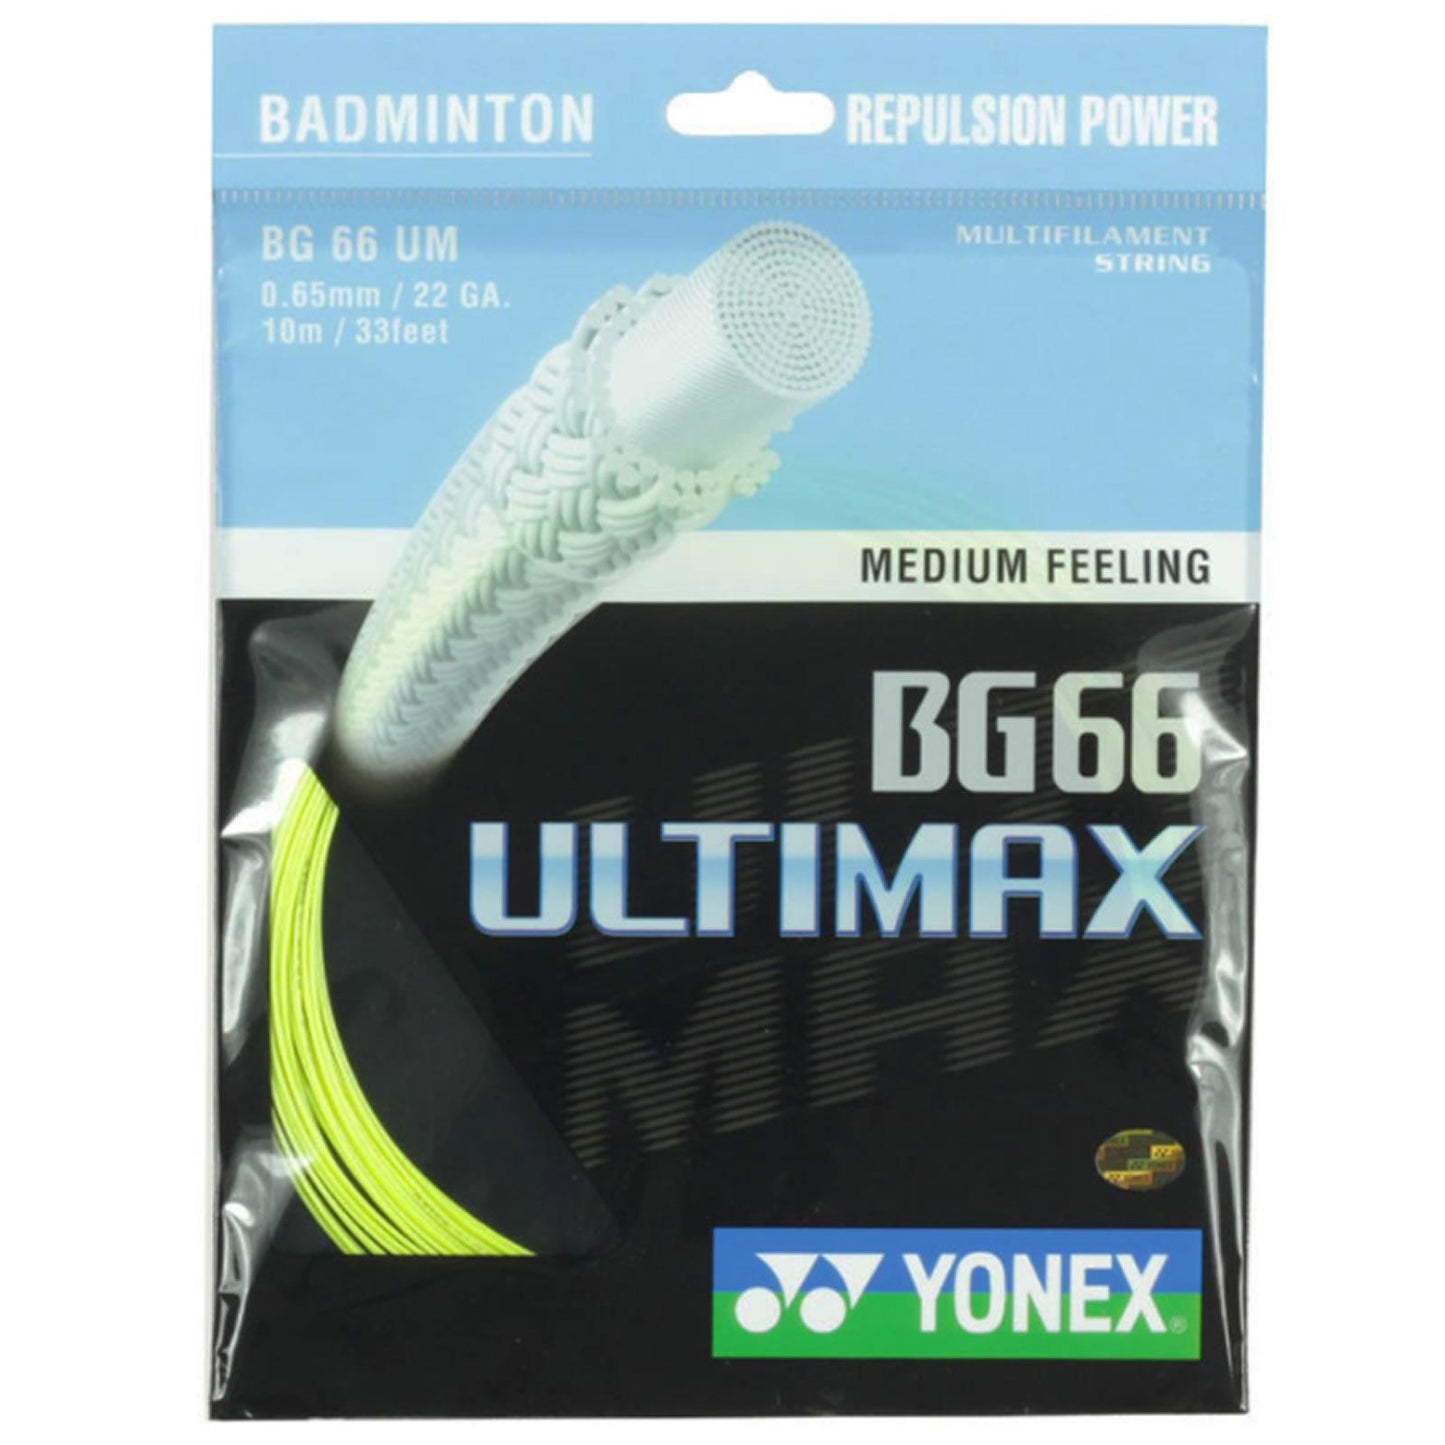 Yonex BG 66 Ultimax Badminton String Yellow - 0.65mm 10m Packet